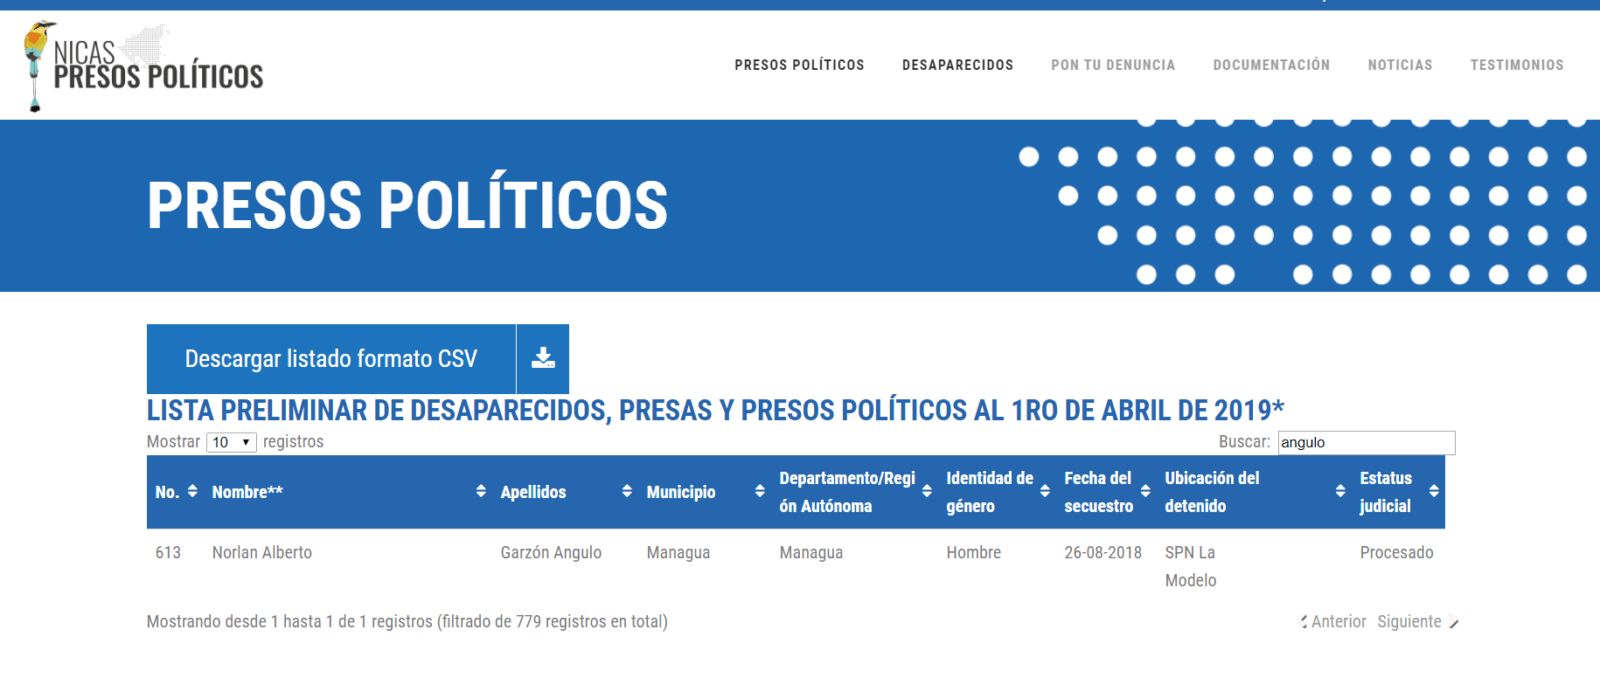 Nicaragua-political-prisoners-Norlan-Alberto-Garzon-Angulo